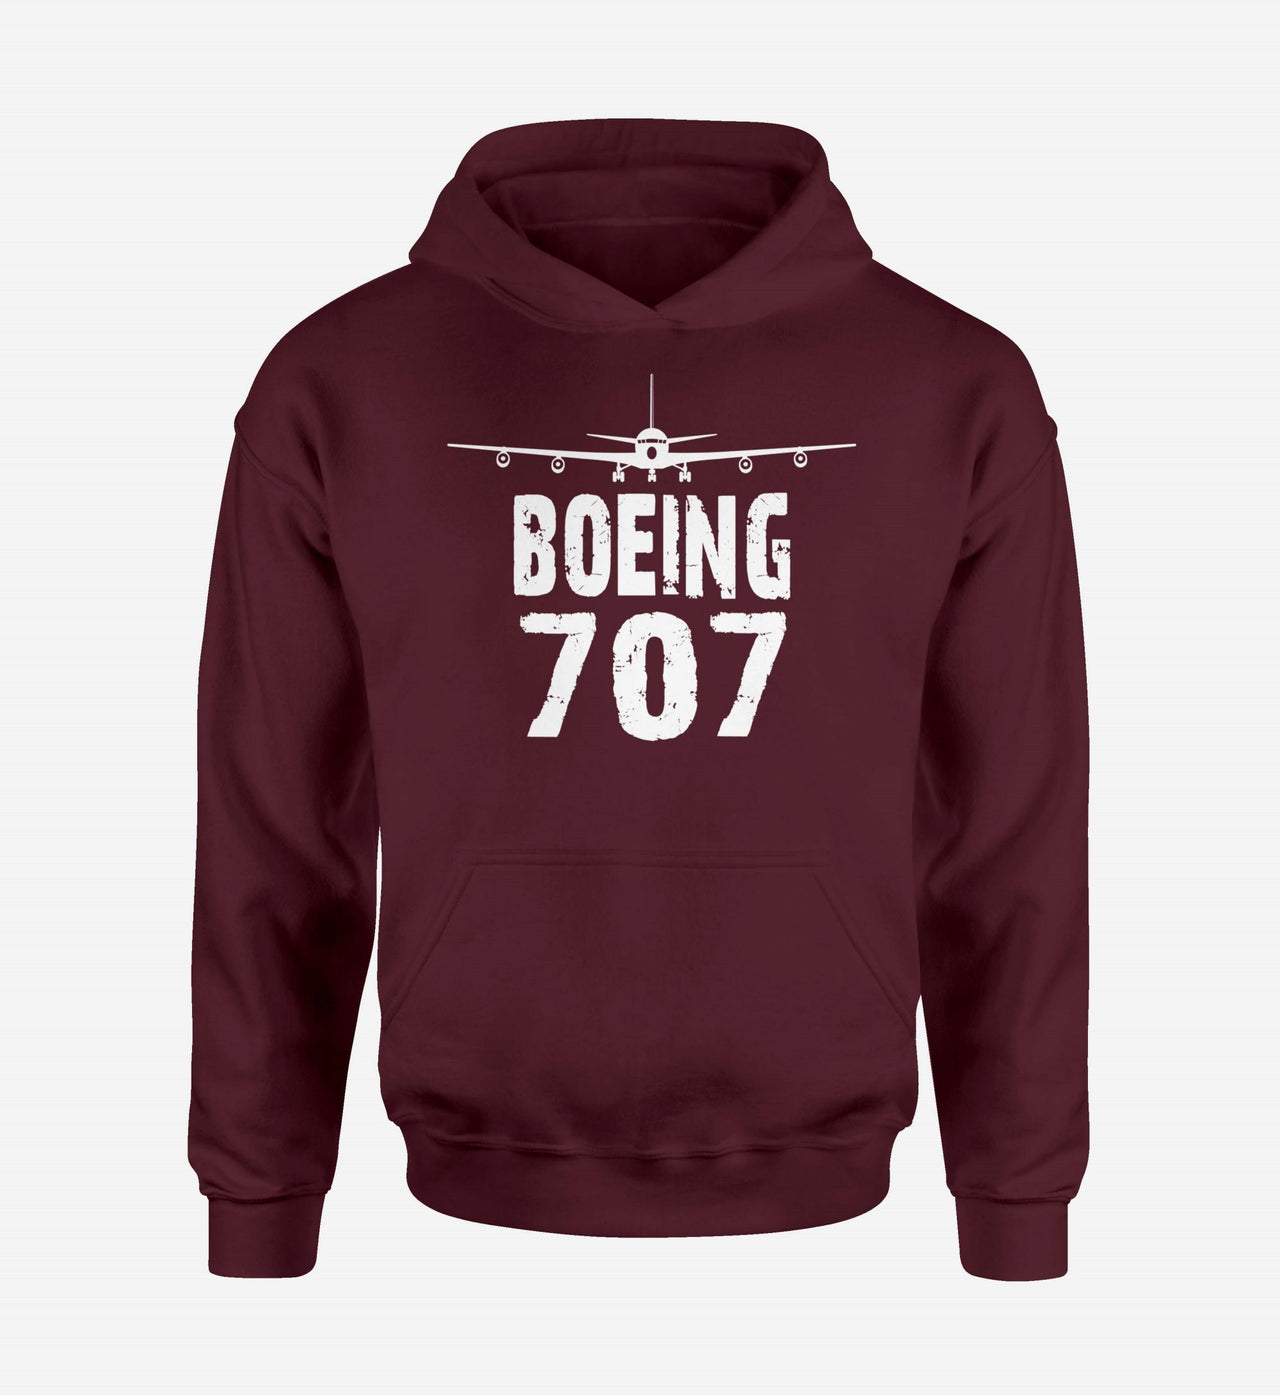 Boeing 707 & Plane Designed Hoodies